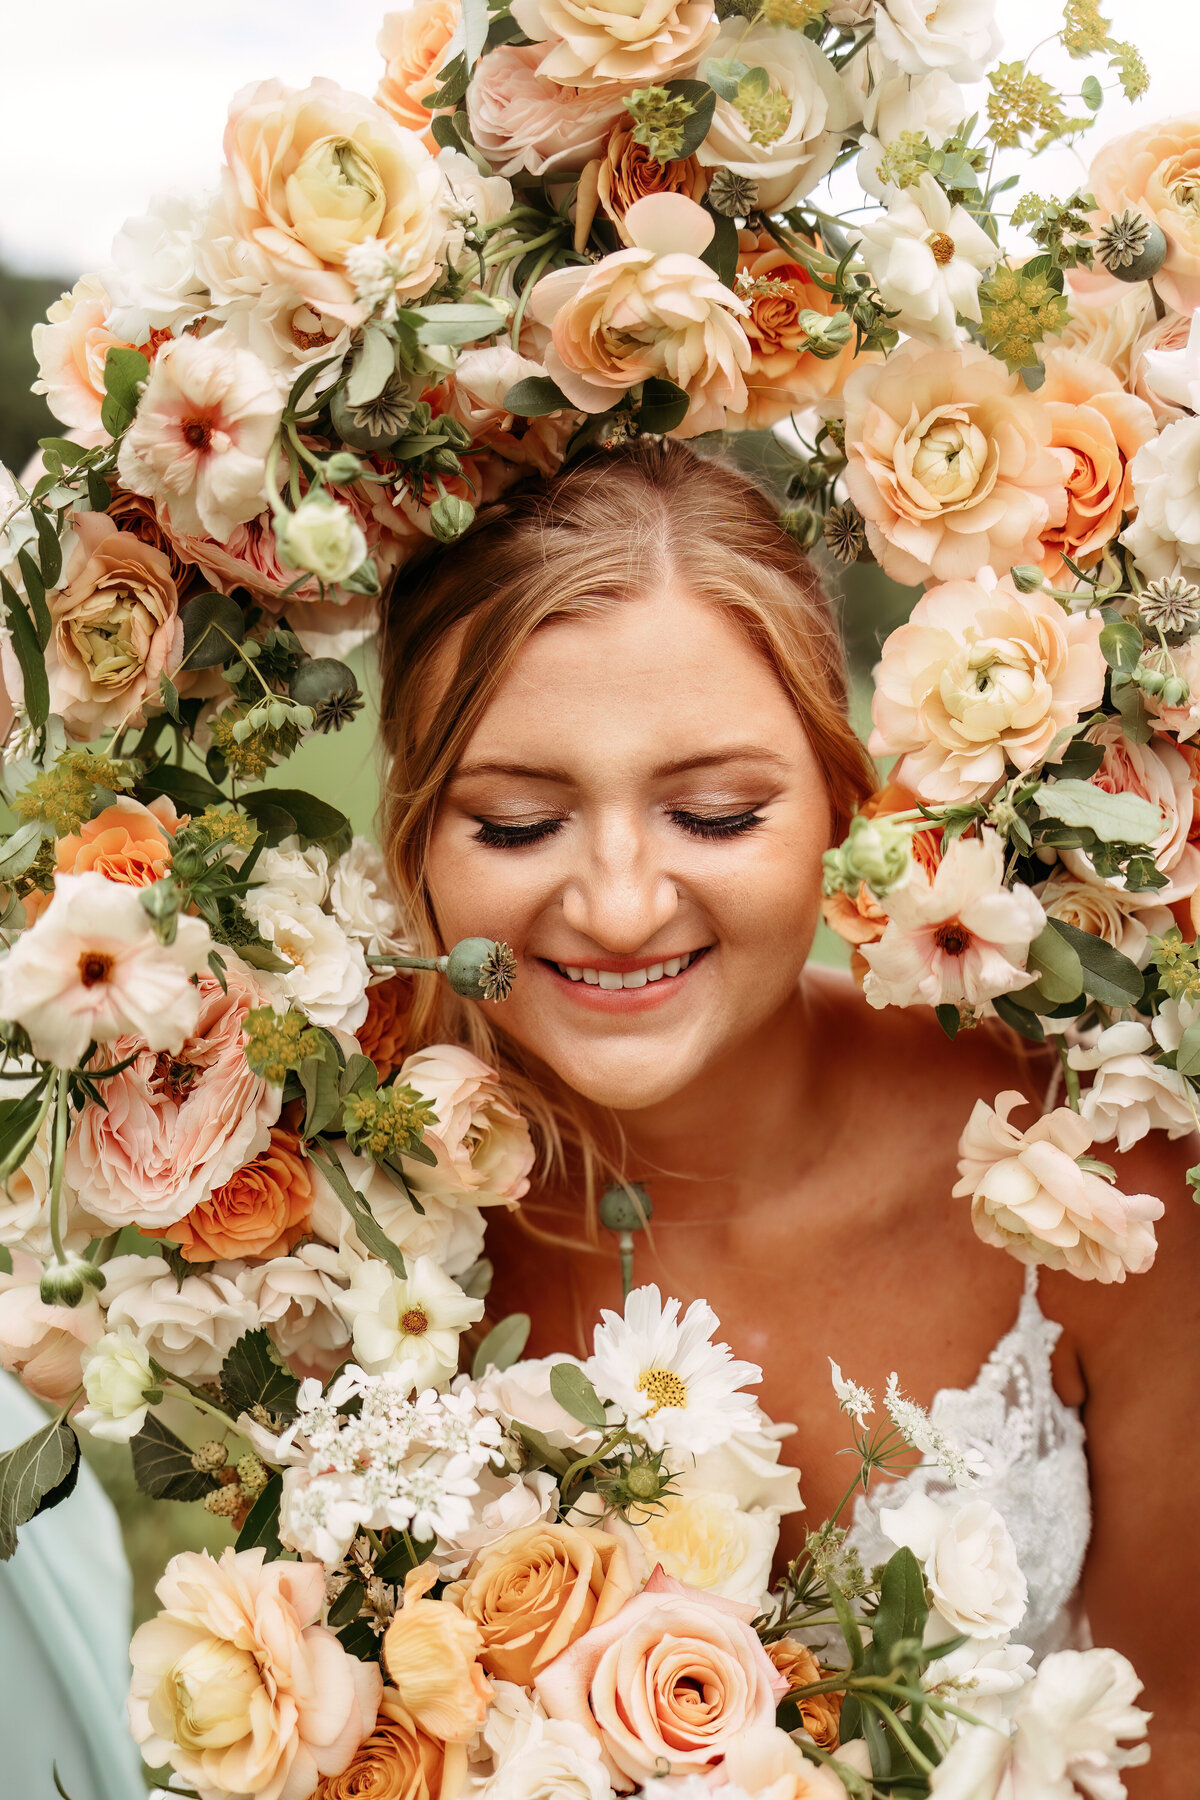 raymond-farm-new-hartford-ct-wedding-flowers-bridal-bouquet-petals-plates-45